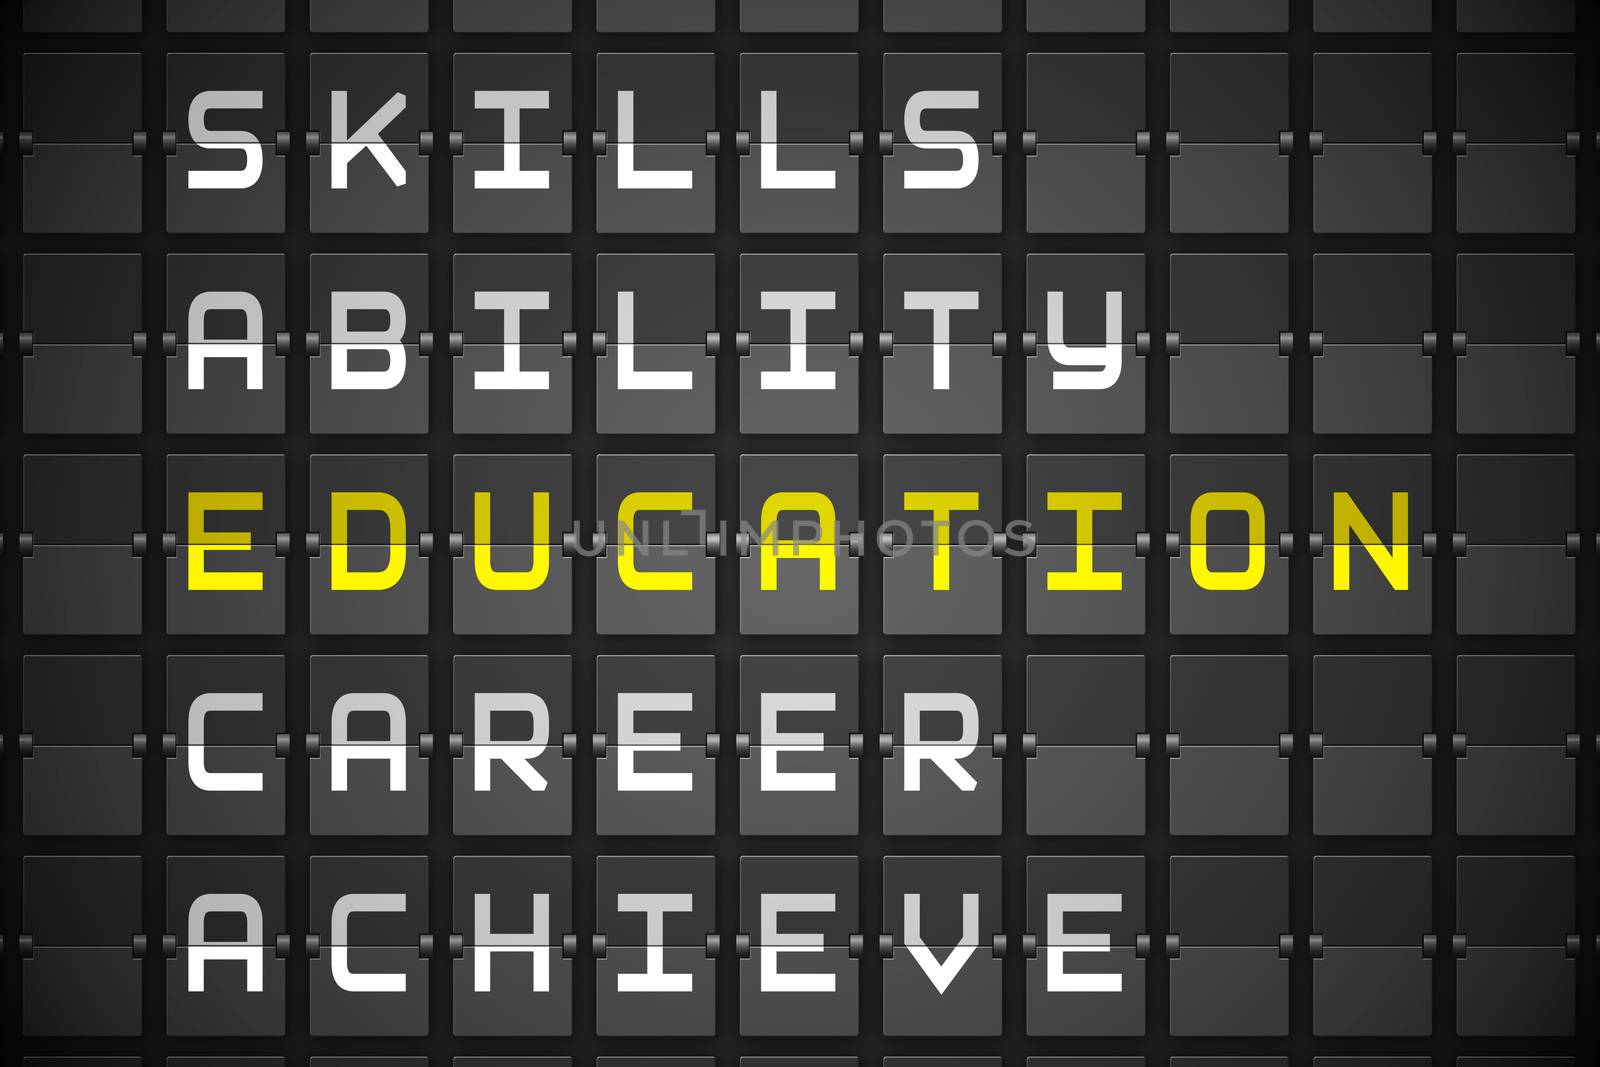 Education buzzwords on black mechanical board by Wavebreakmedia